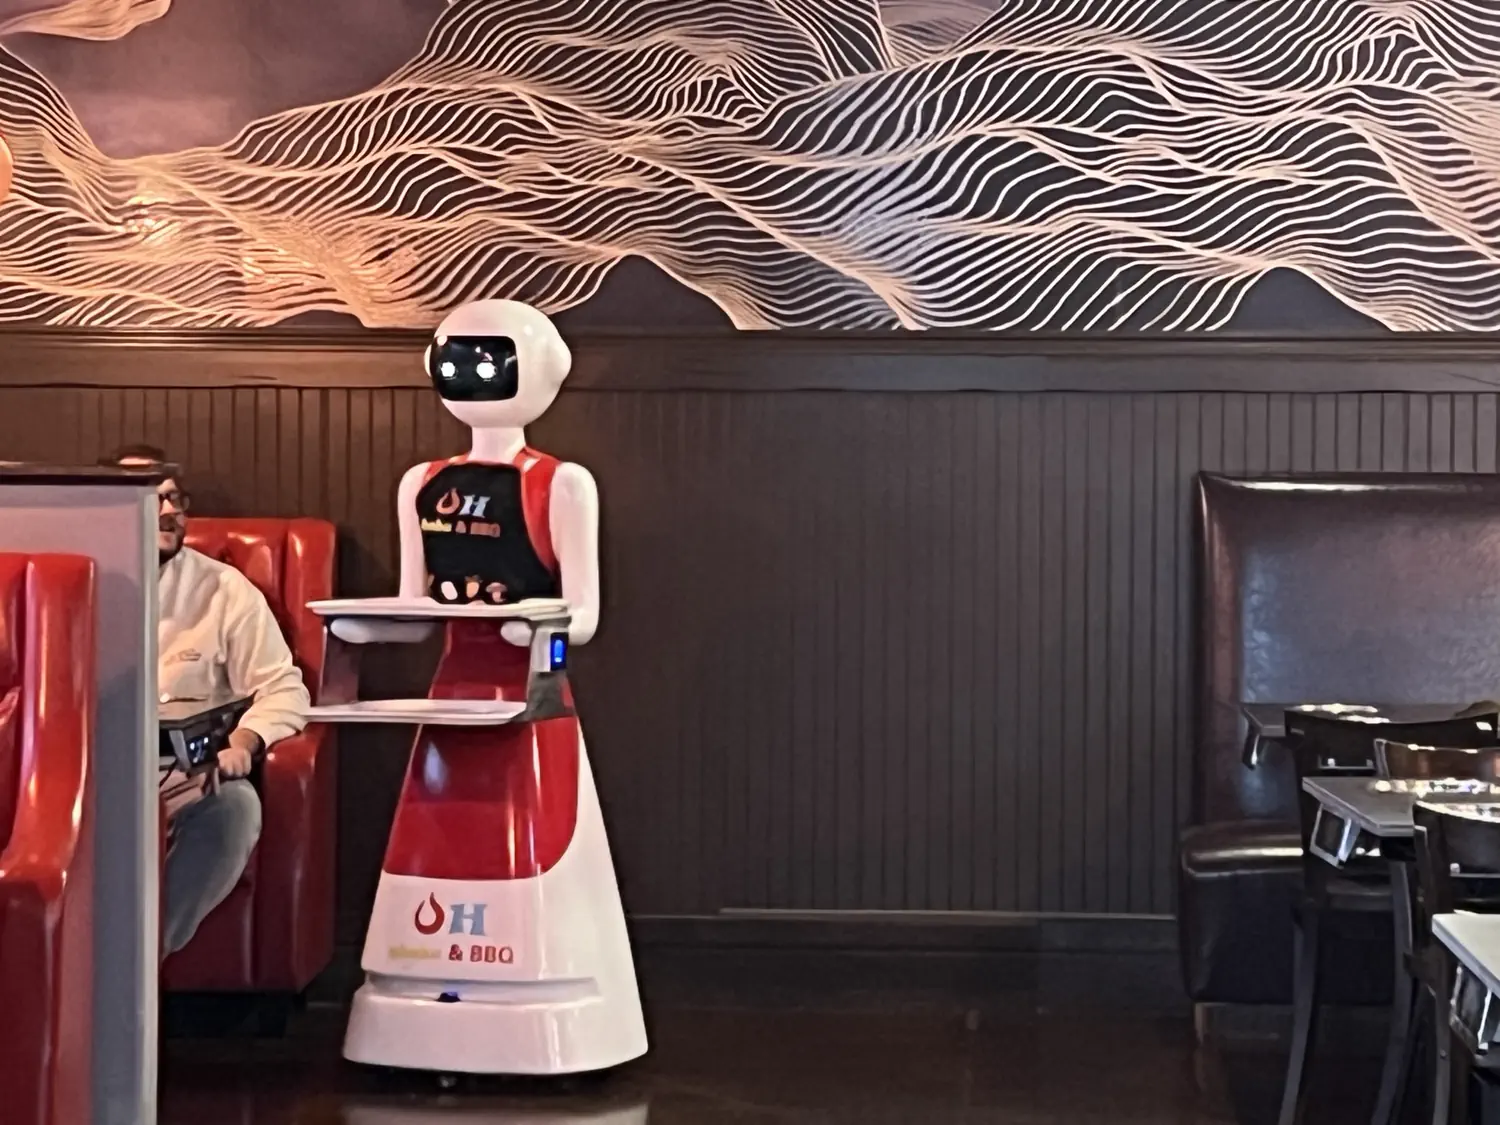 A robot waiter serves customers at Oh! Shabu Shabu & BBQ in South Jordan, UT